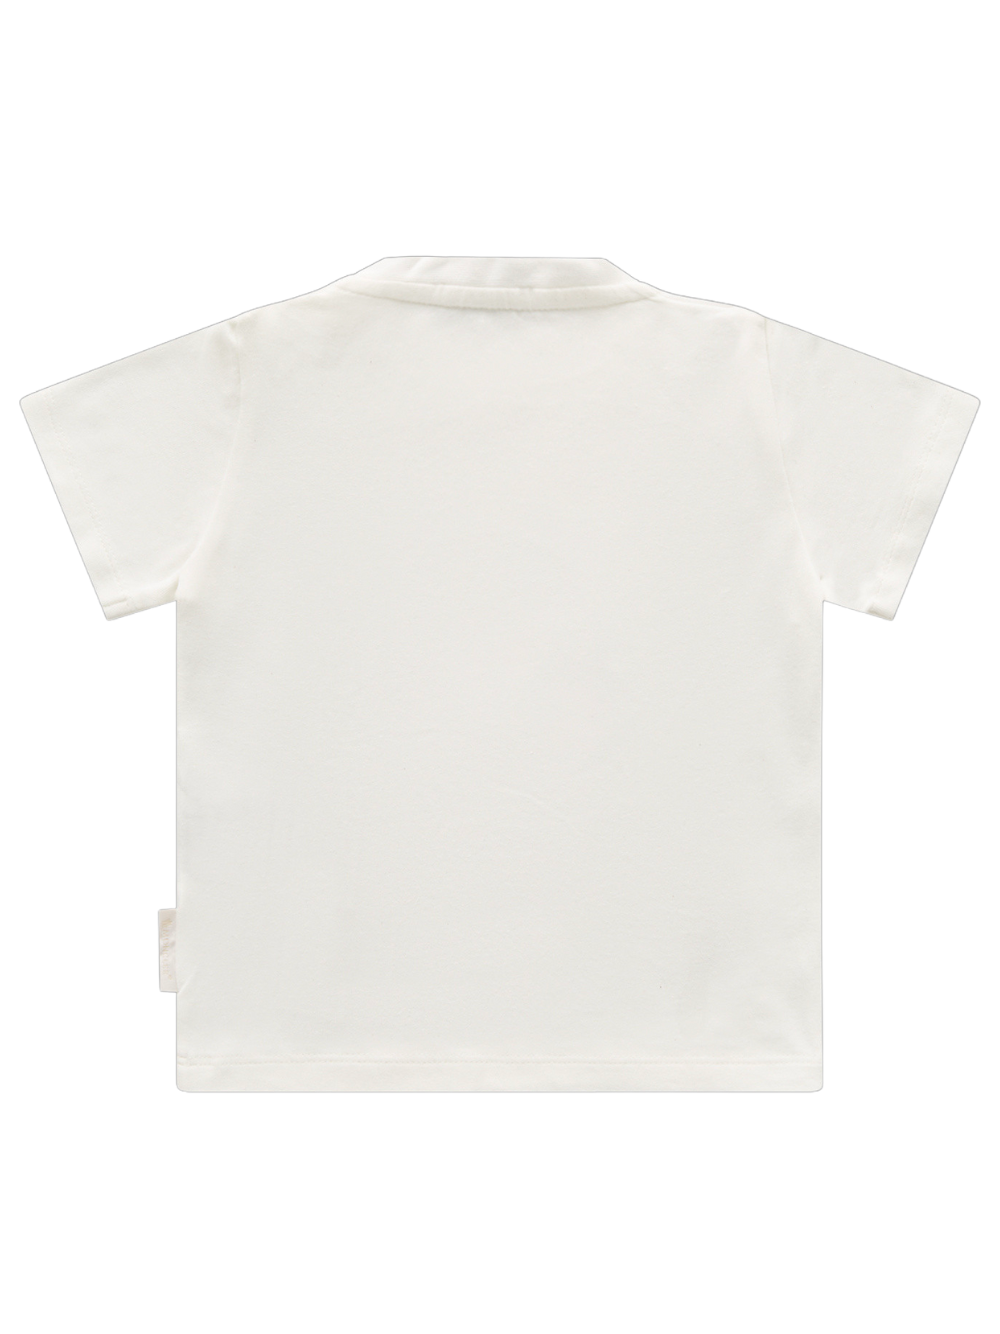 MONCLER BABY Logo T-Shirt Milk White - MAISONDEFASHION.COM